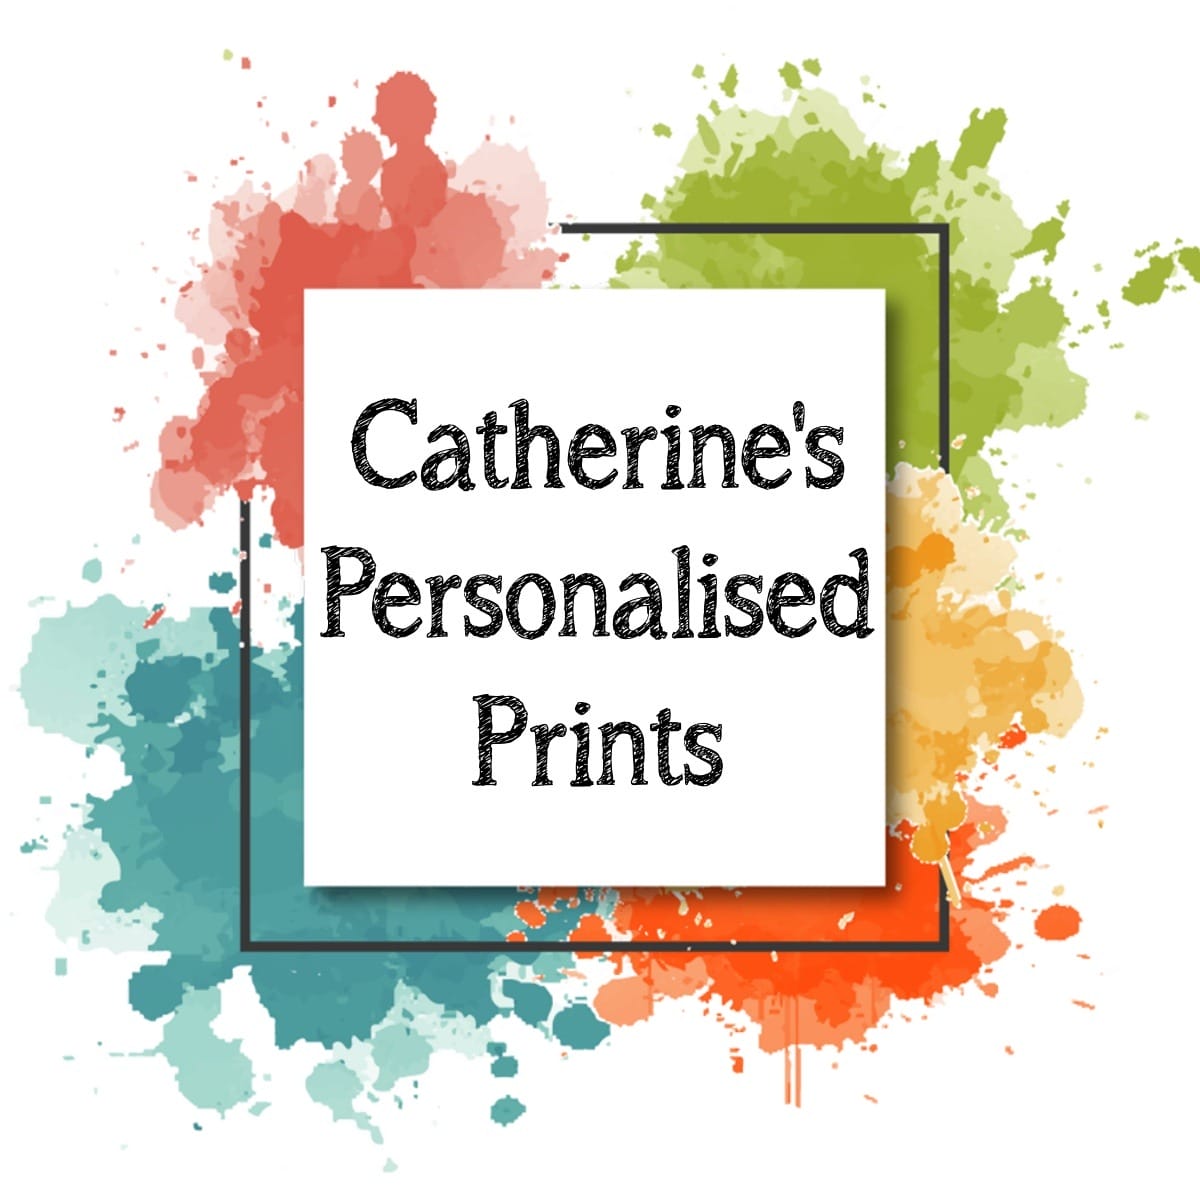 Catherine’s Personalised Prints